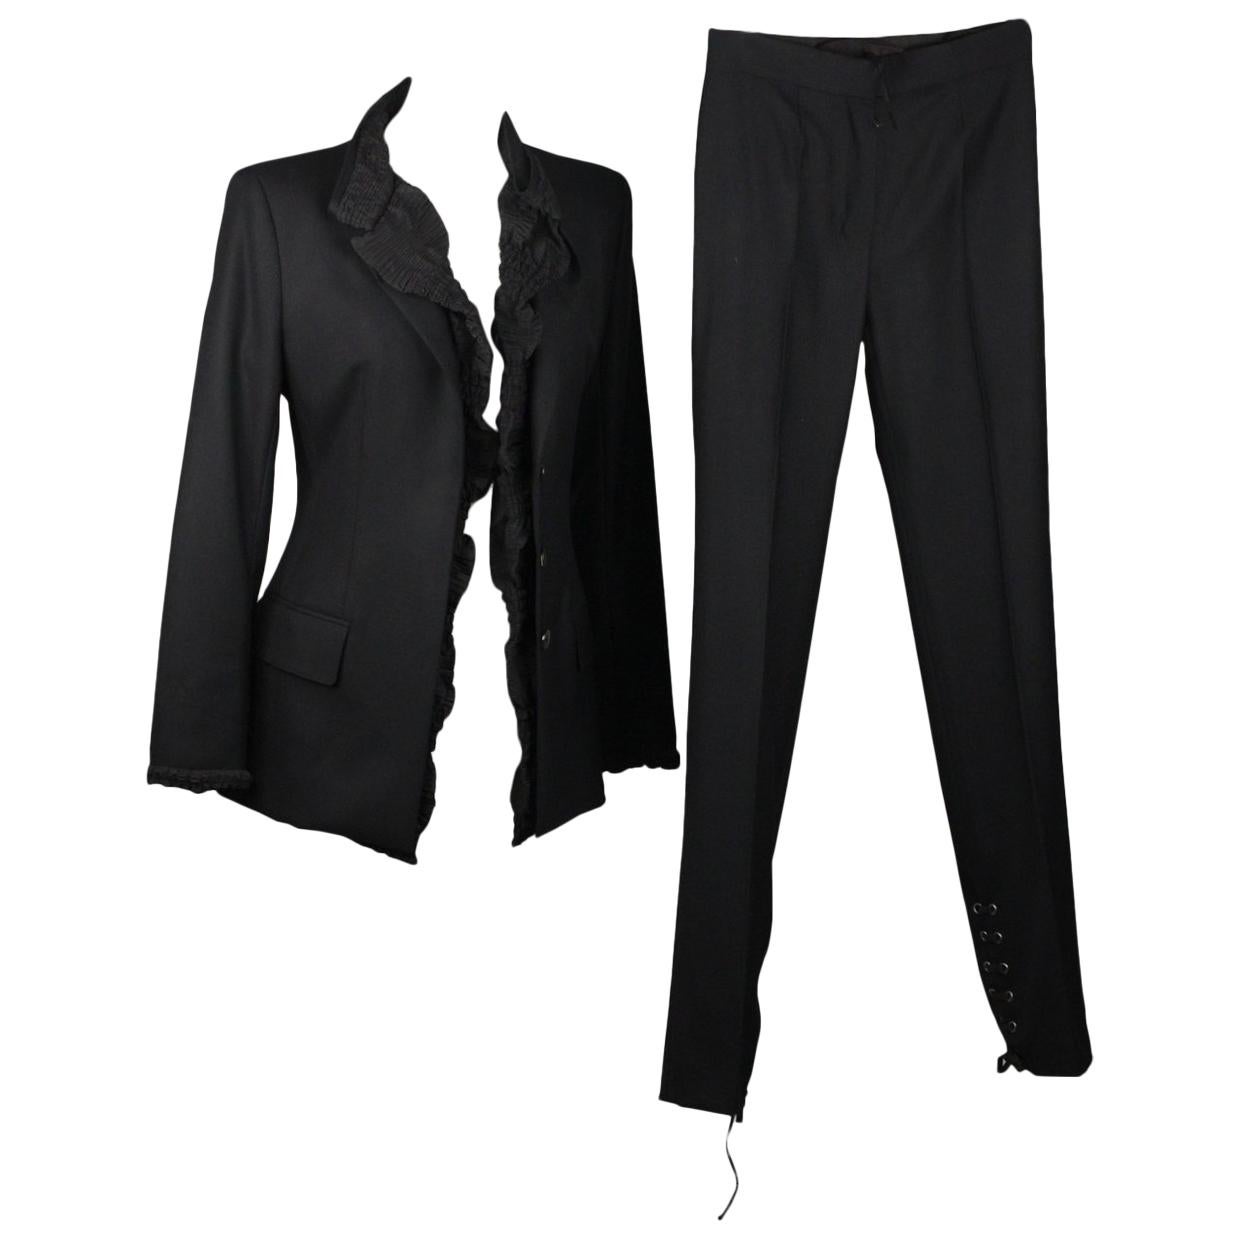 Yves Saint Laurent Black Wool Pant Suit with Ruffles Size 36